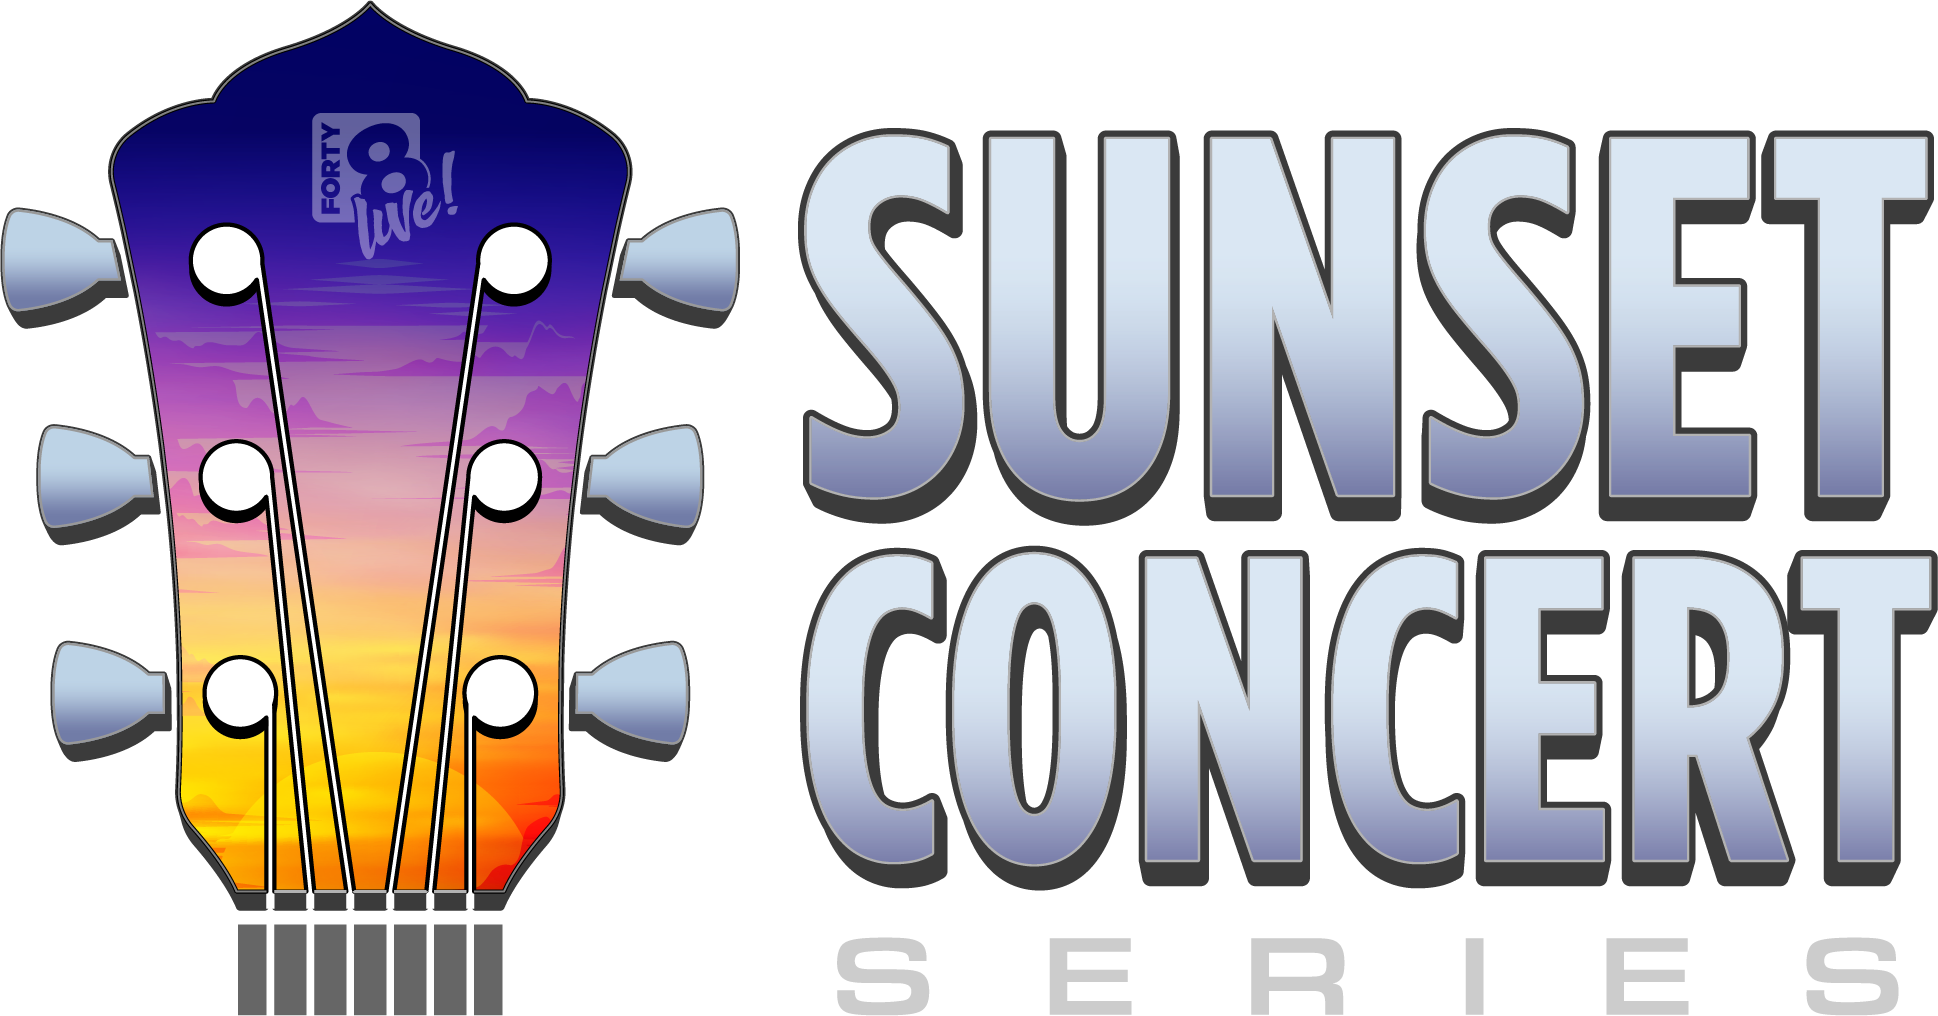 2023 Sunset Concert Series